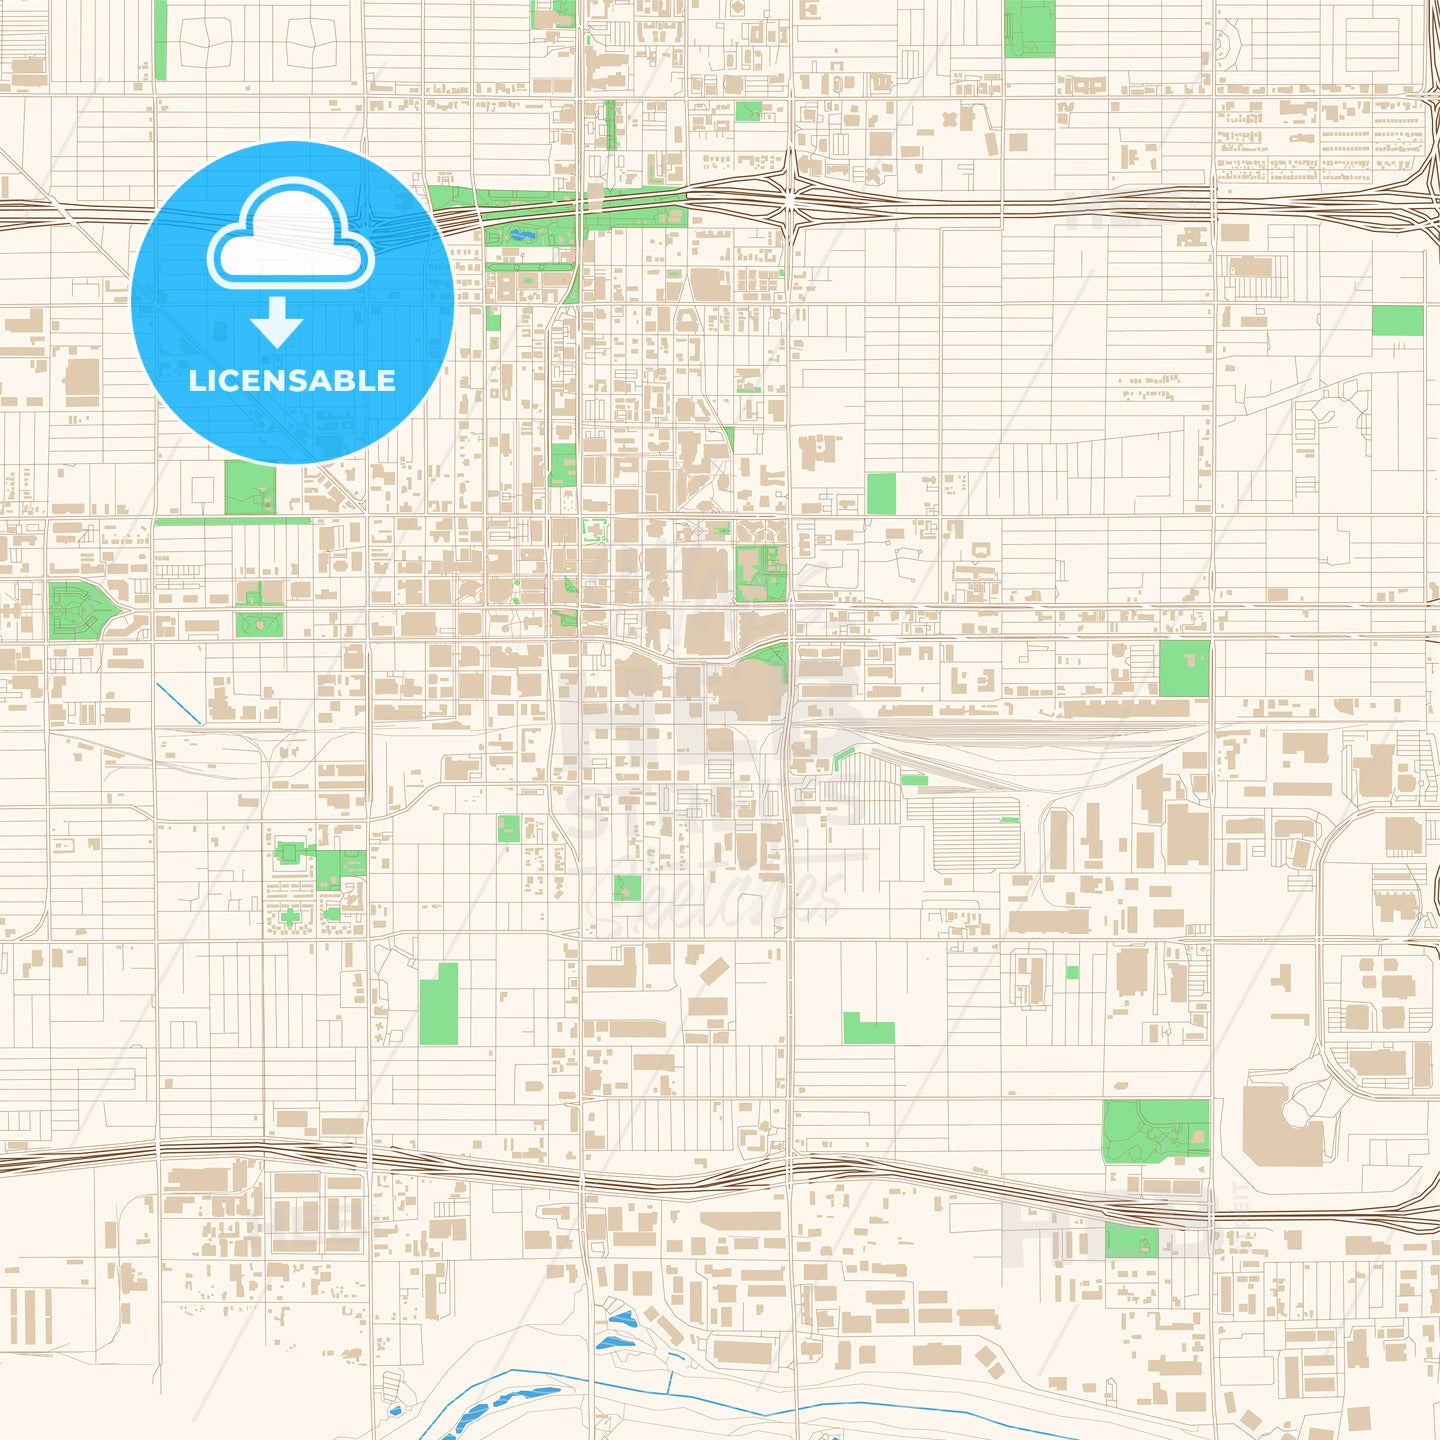 Street map of downtown Phoenix, Arizona